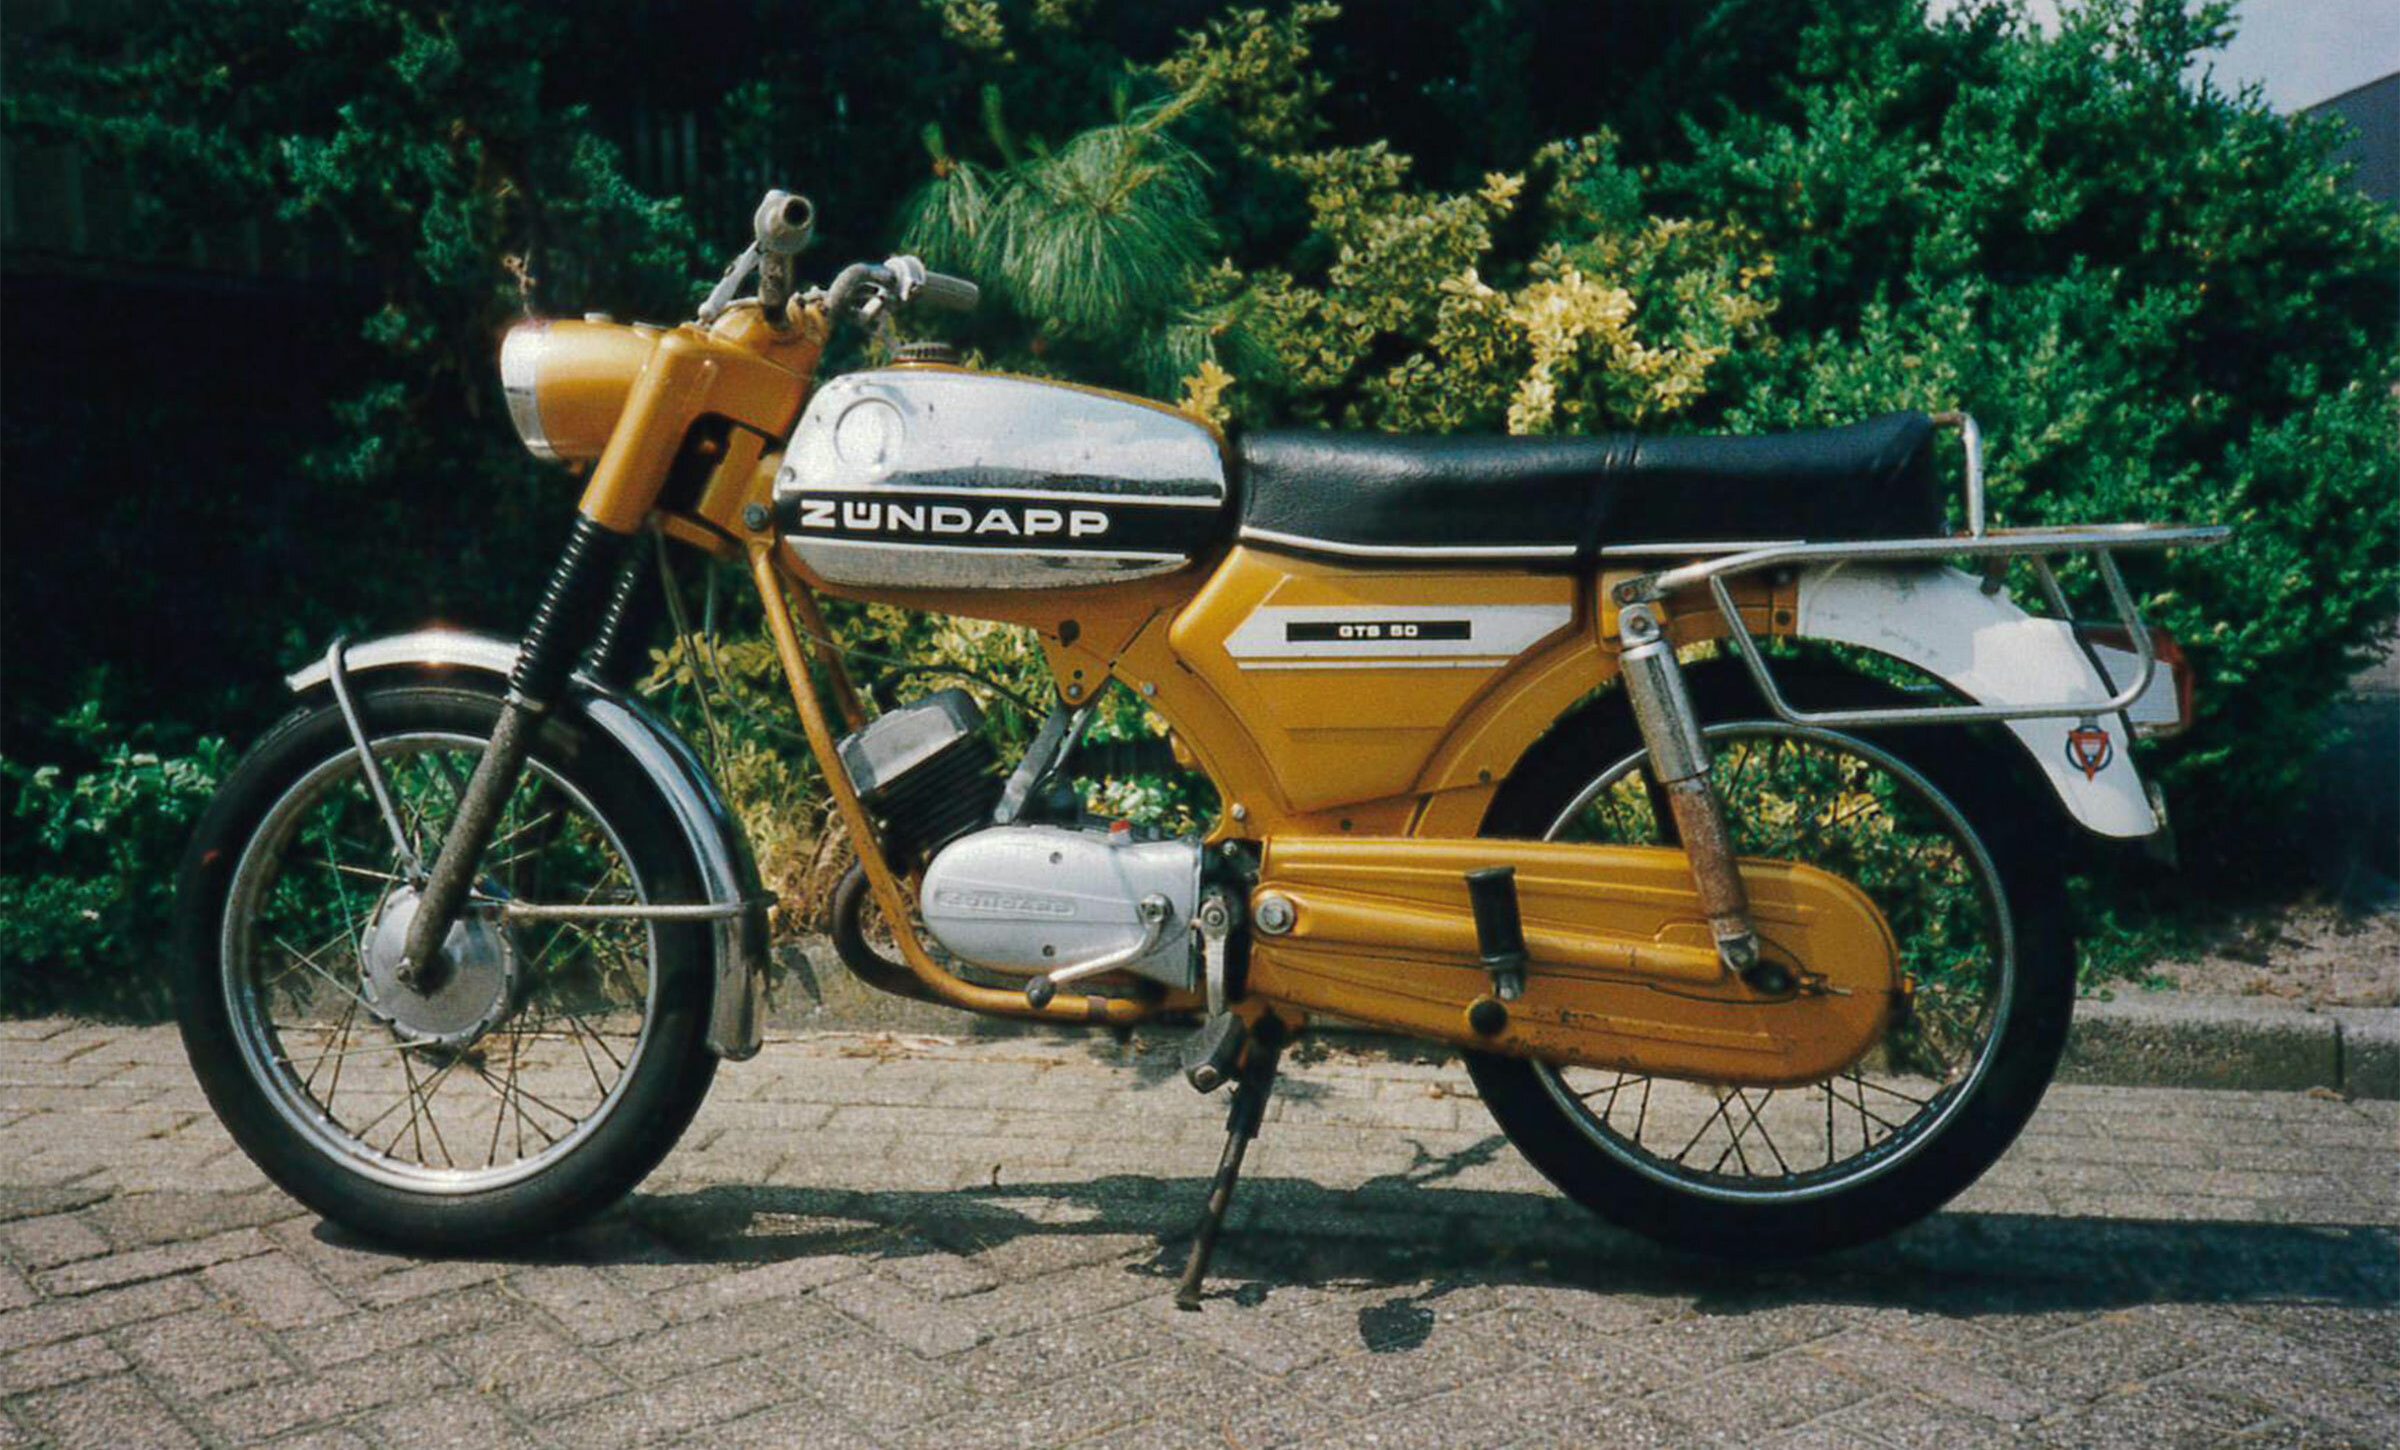 Zundapp gts50 1973 2